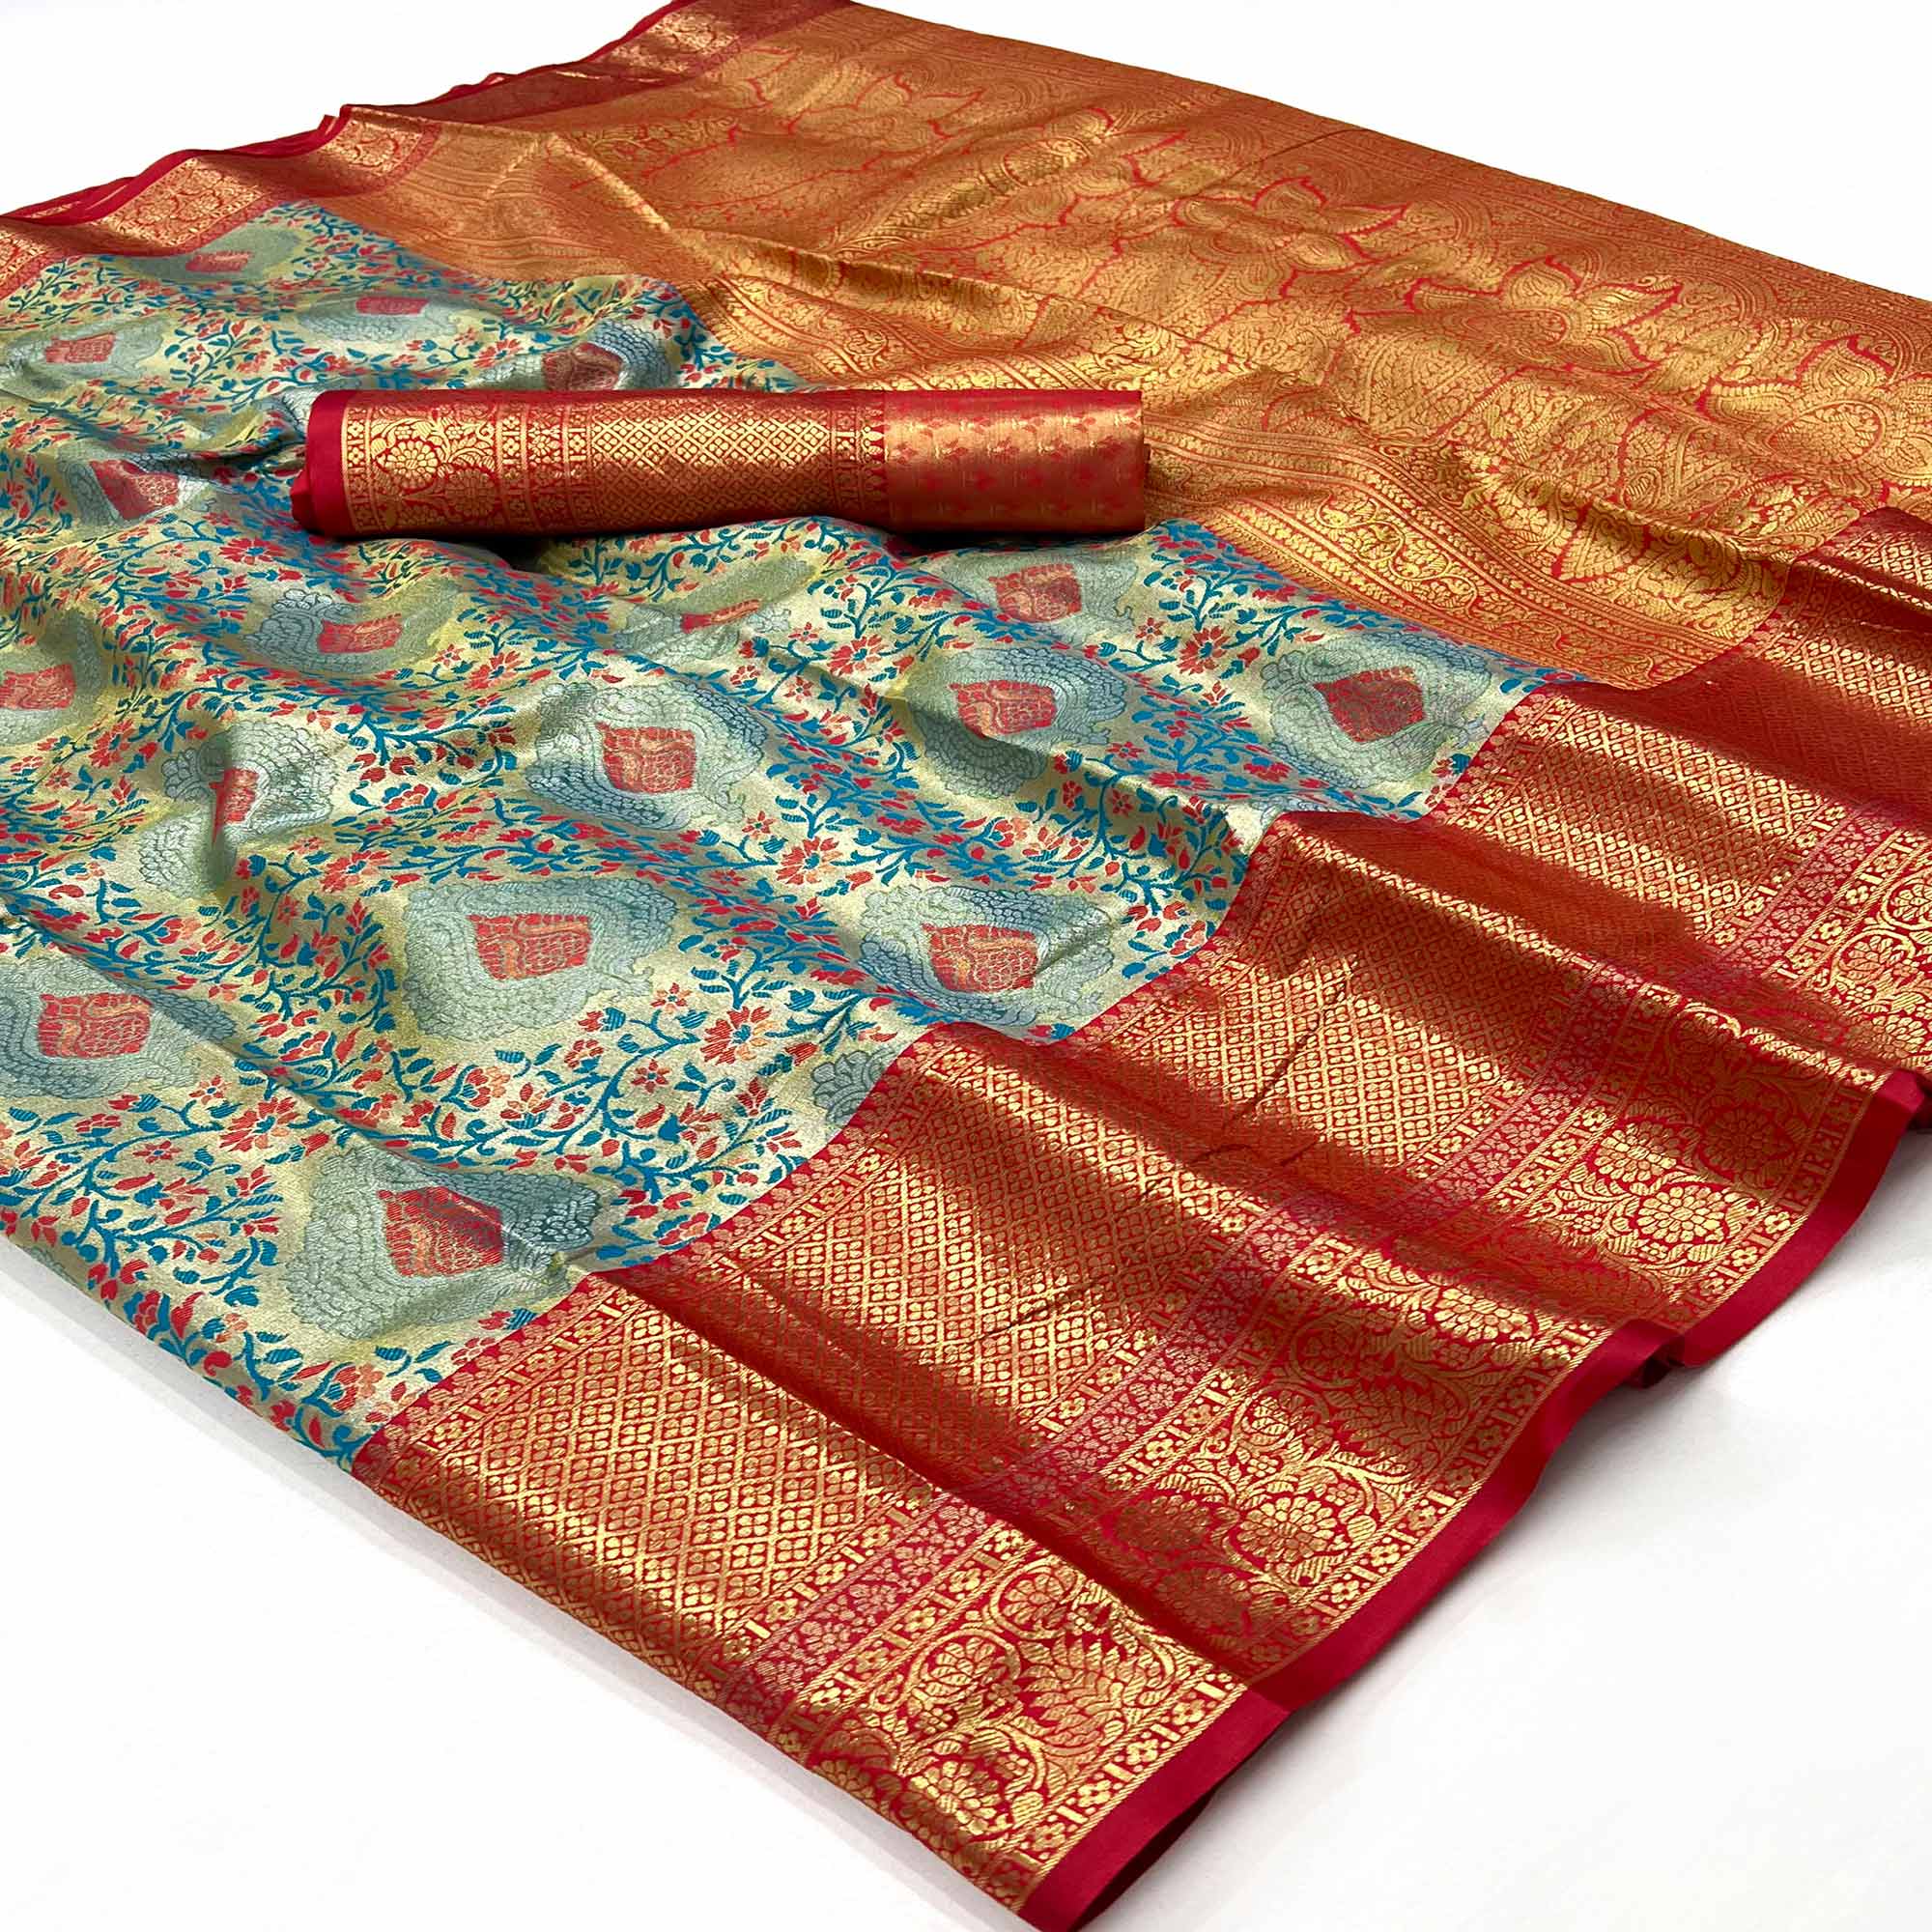 Blue & Red Floral Woven Kanjivaram Silk Saree